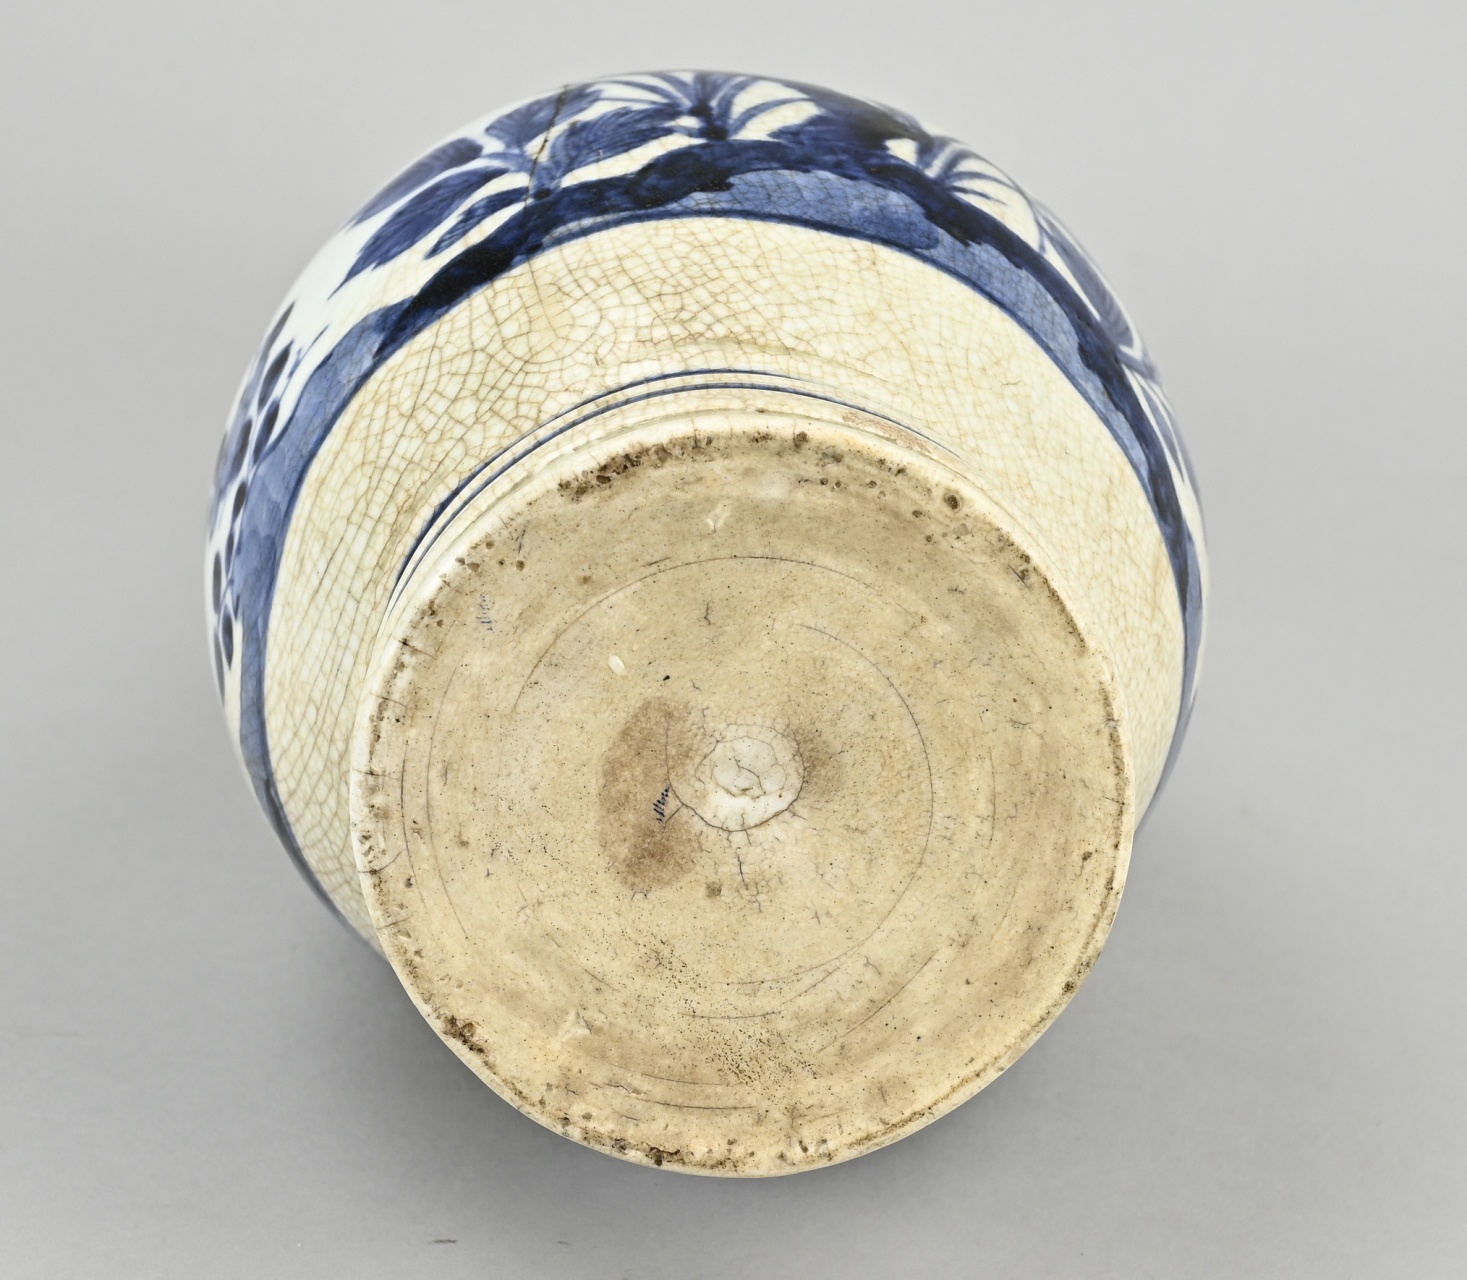 Japanese jug, H 29.6 cm. - Image 2 of 2